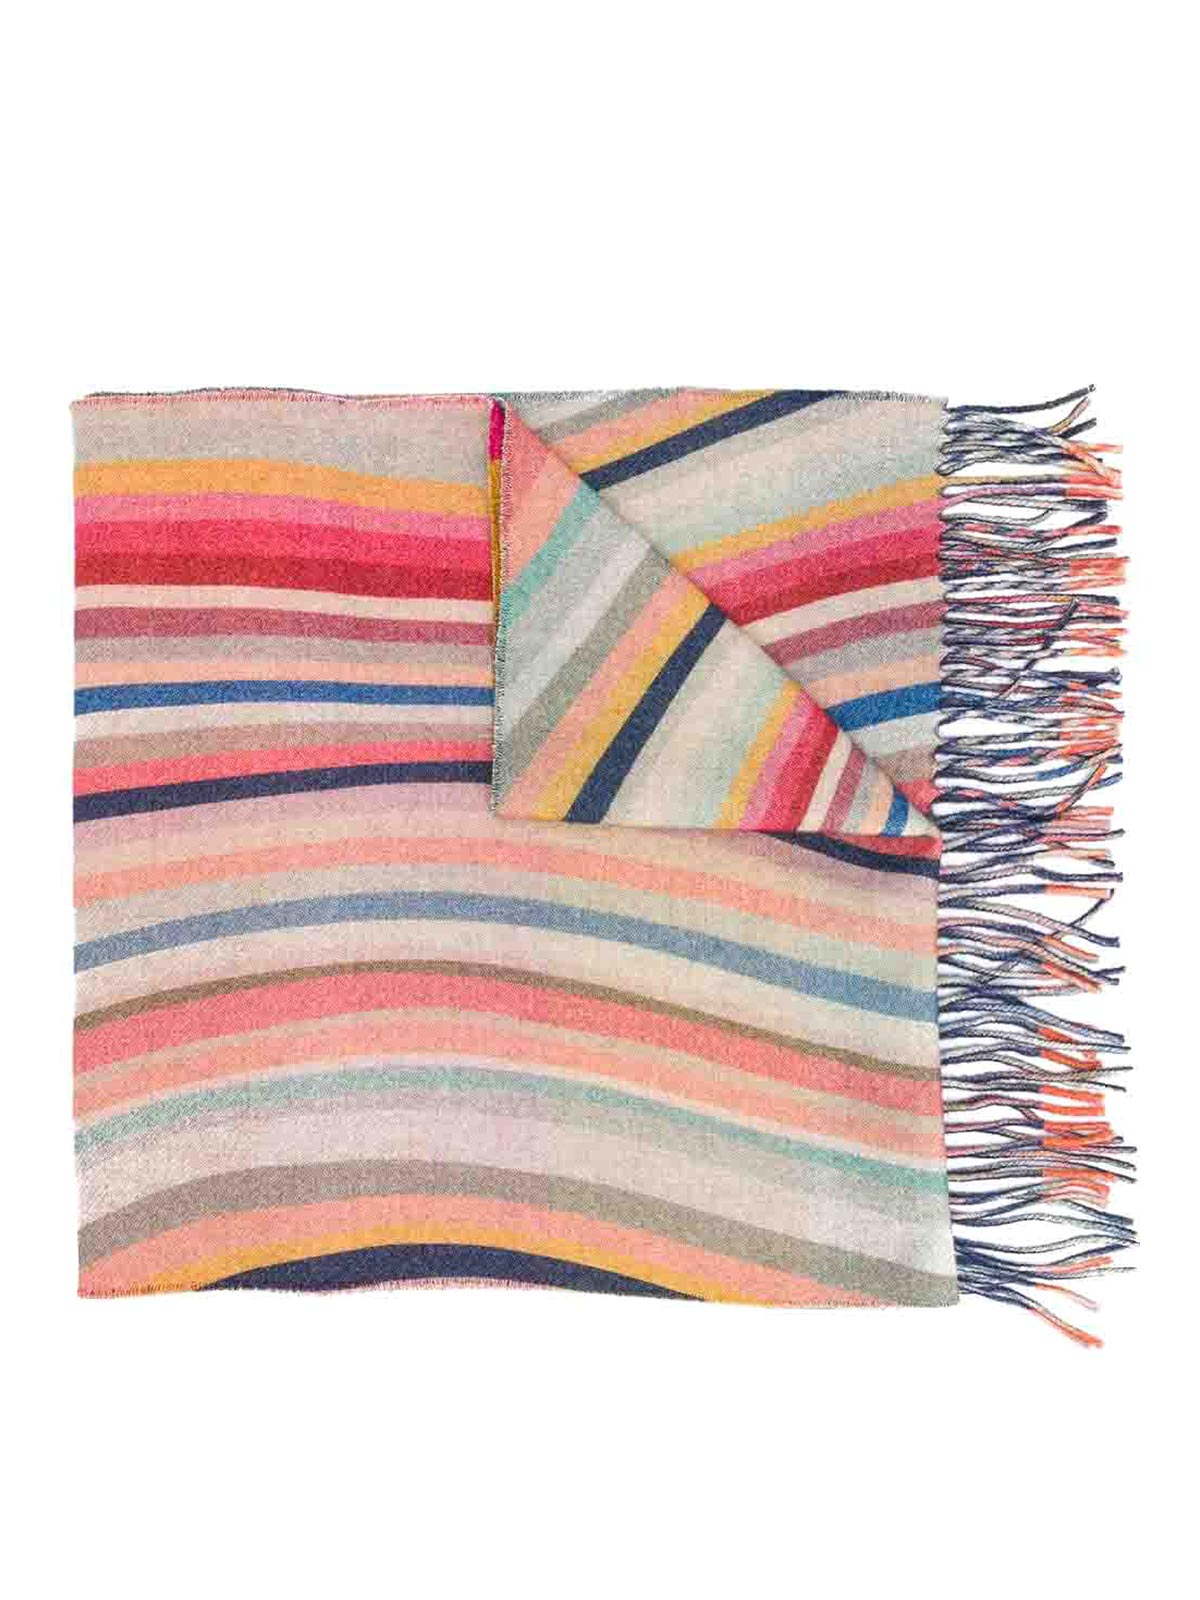 Paul Smith Swirl Striped Pattern Bag - Farfetch